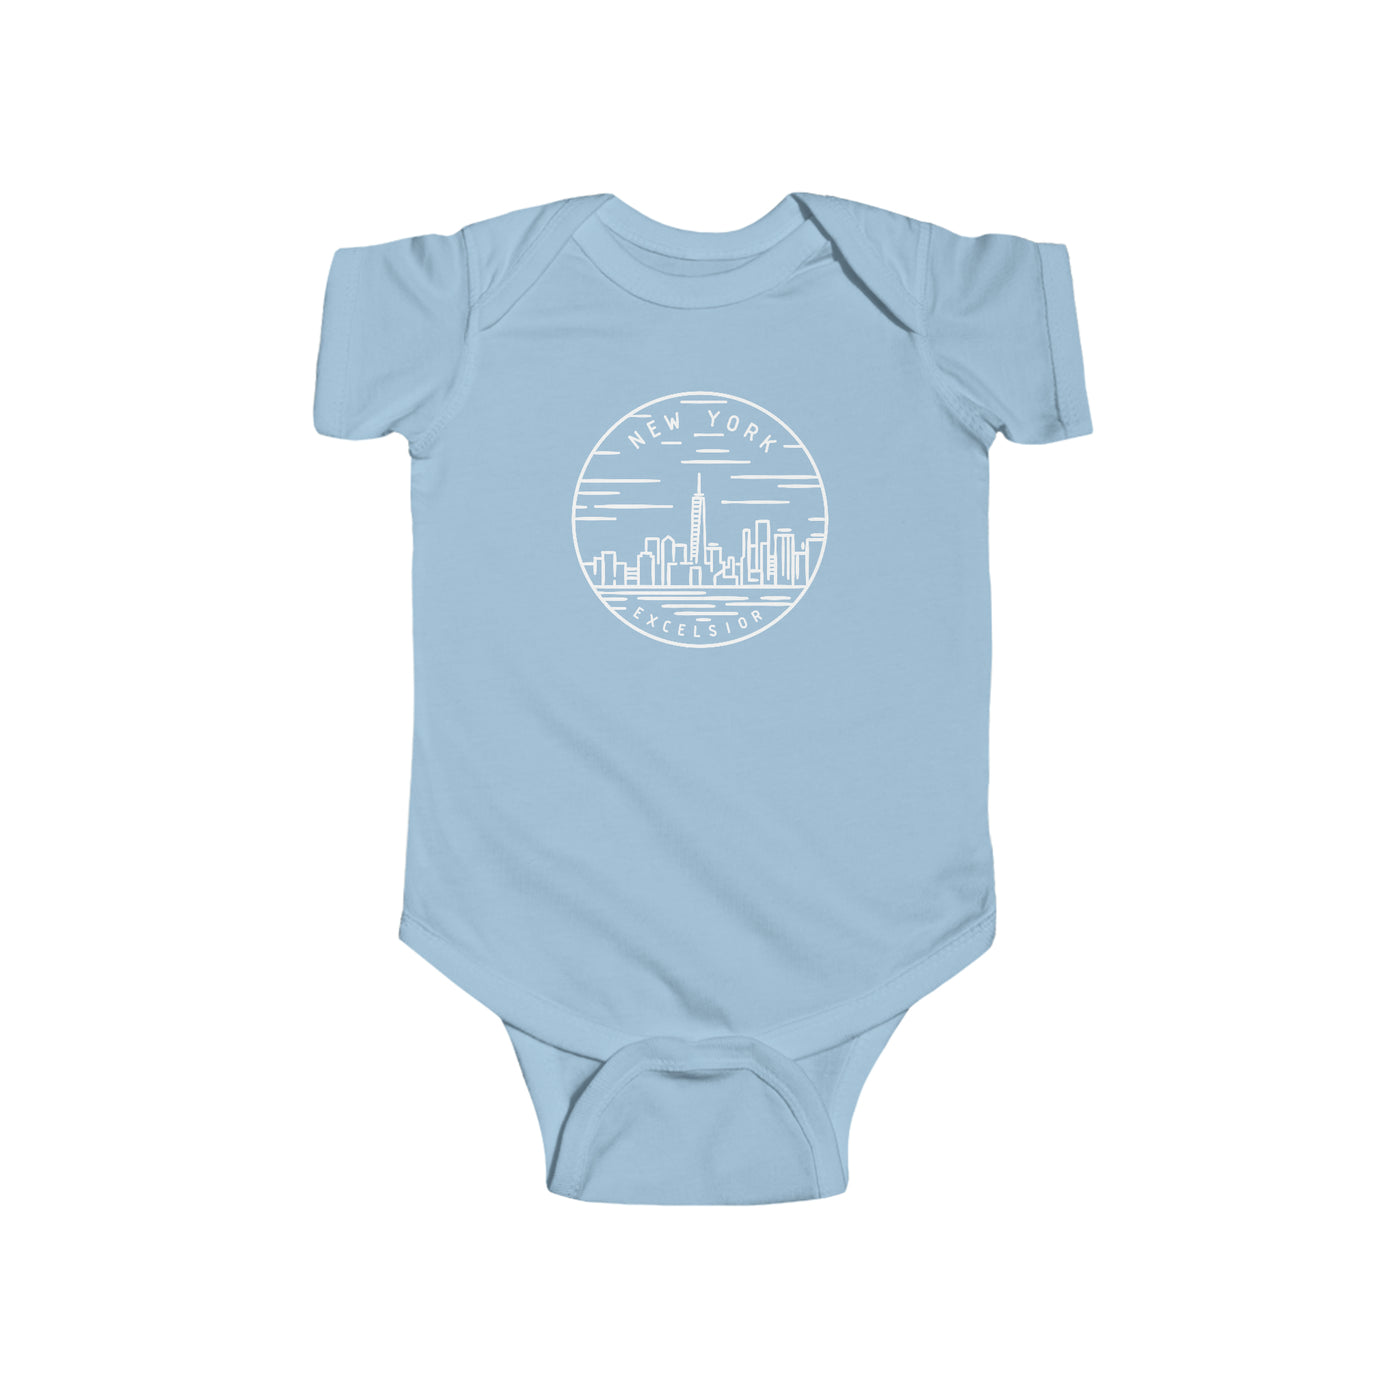 New York State Motto Baby Bodysuit